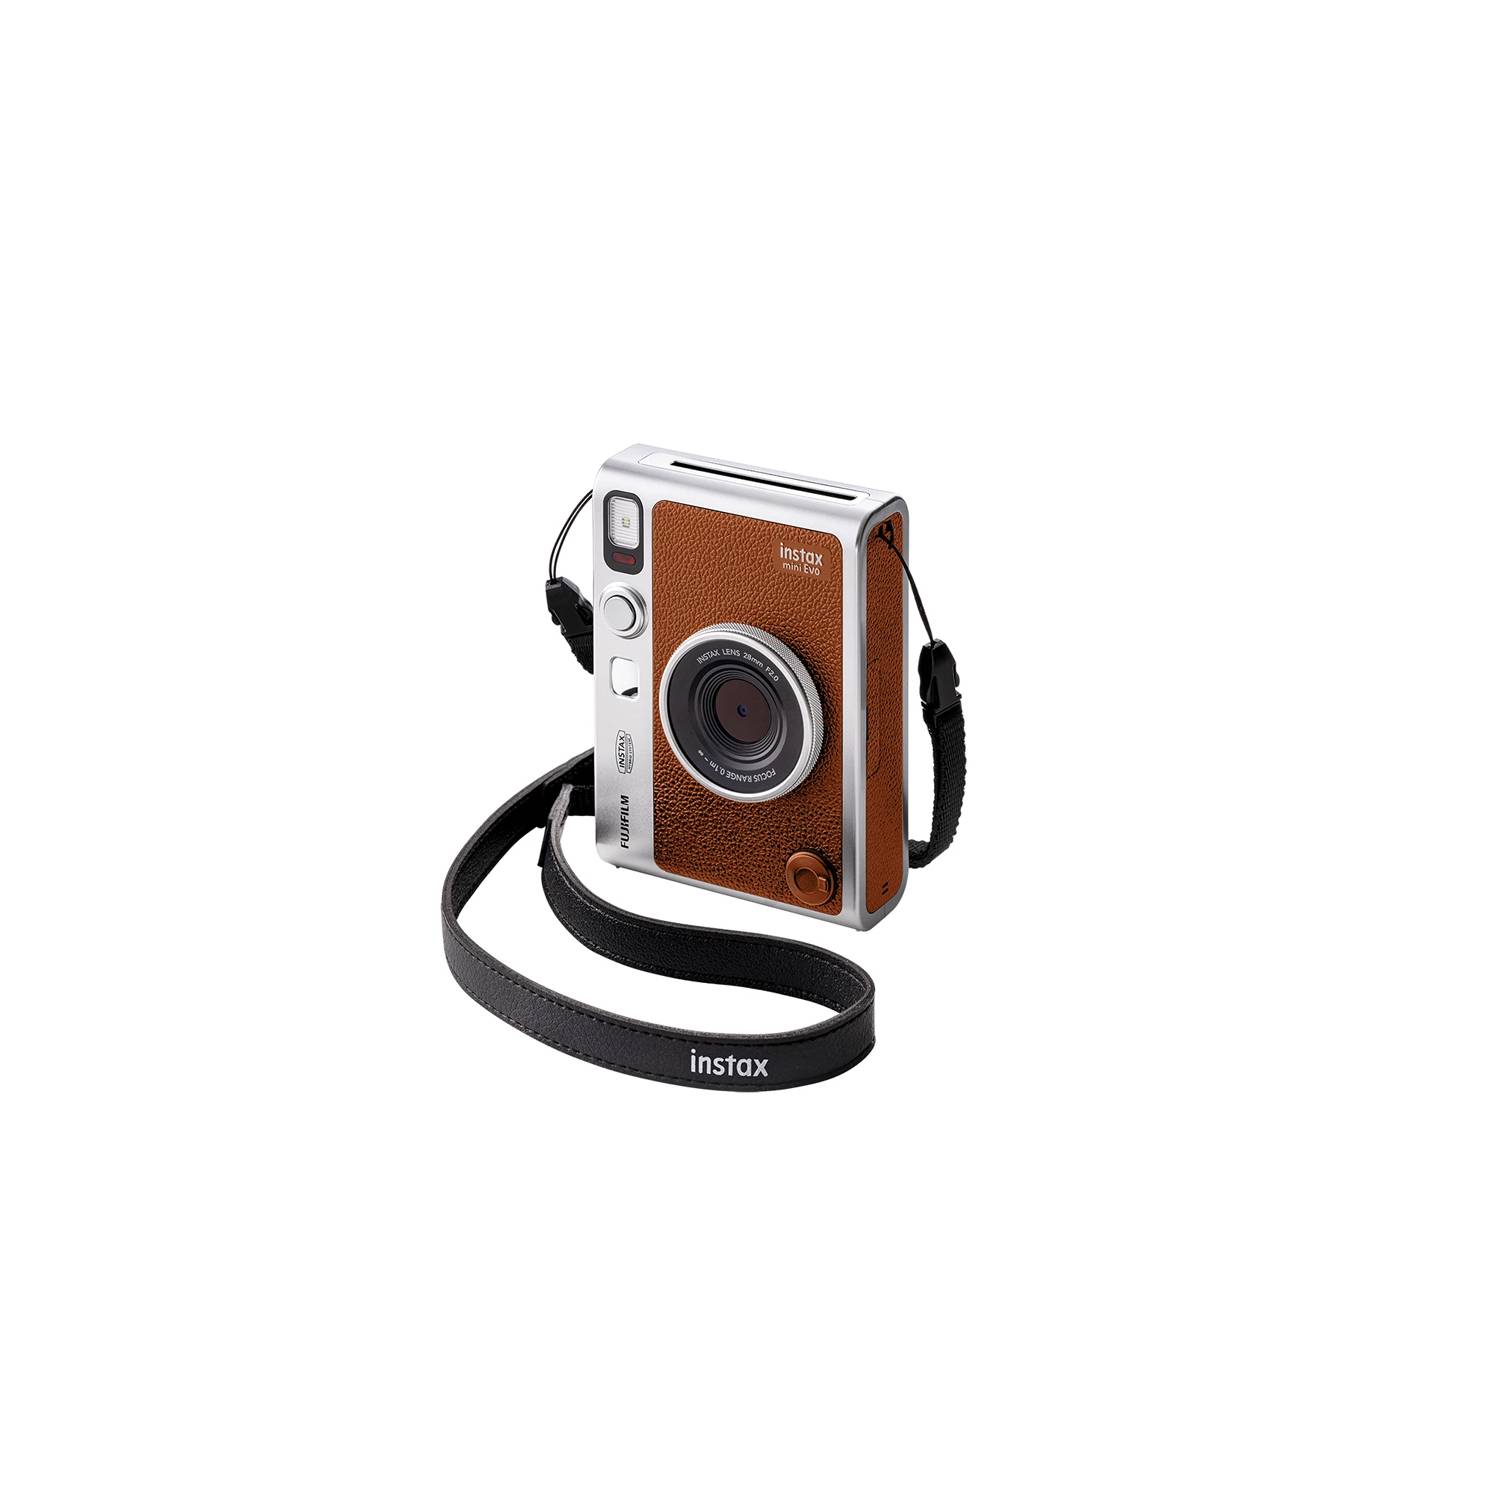 Camara Fujifilm Instax Mini Evo Marron. FUJIFILM